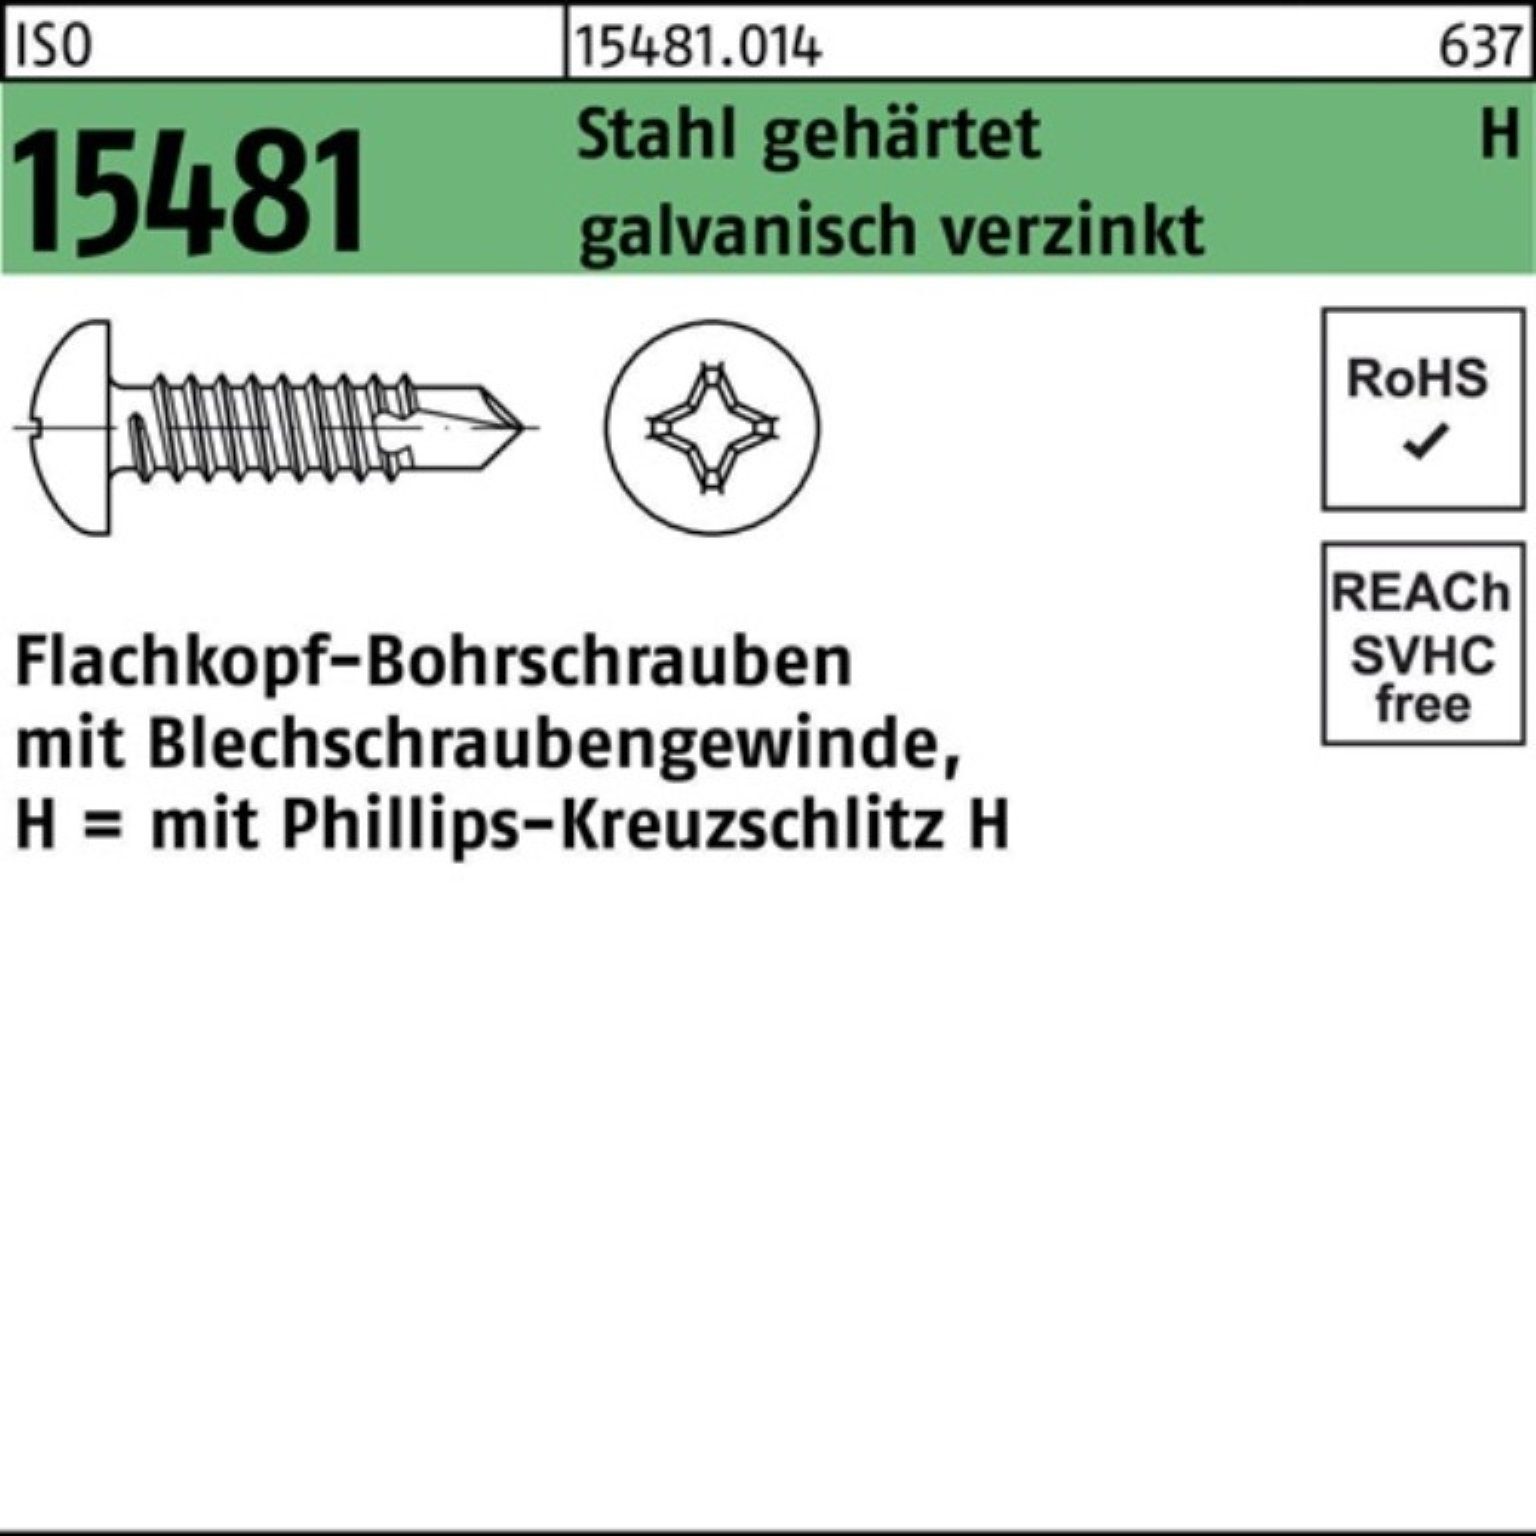 Reyher Bohrschraube 250er Pack FLAKObohrschraube ISO 15481 PH ST 4,8x100-H Stahl gehärtet